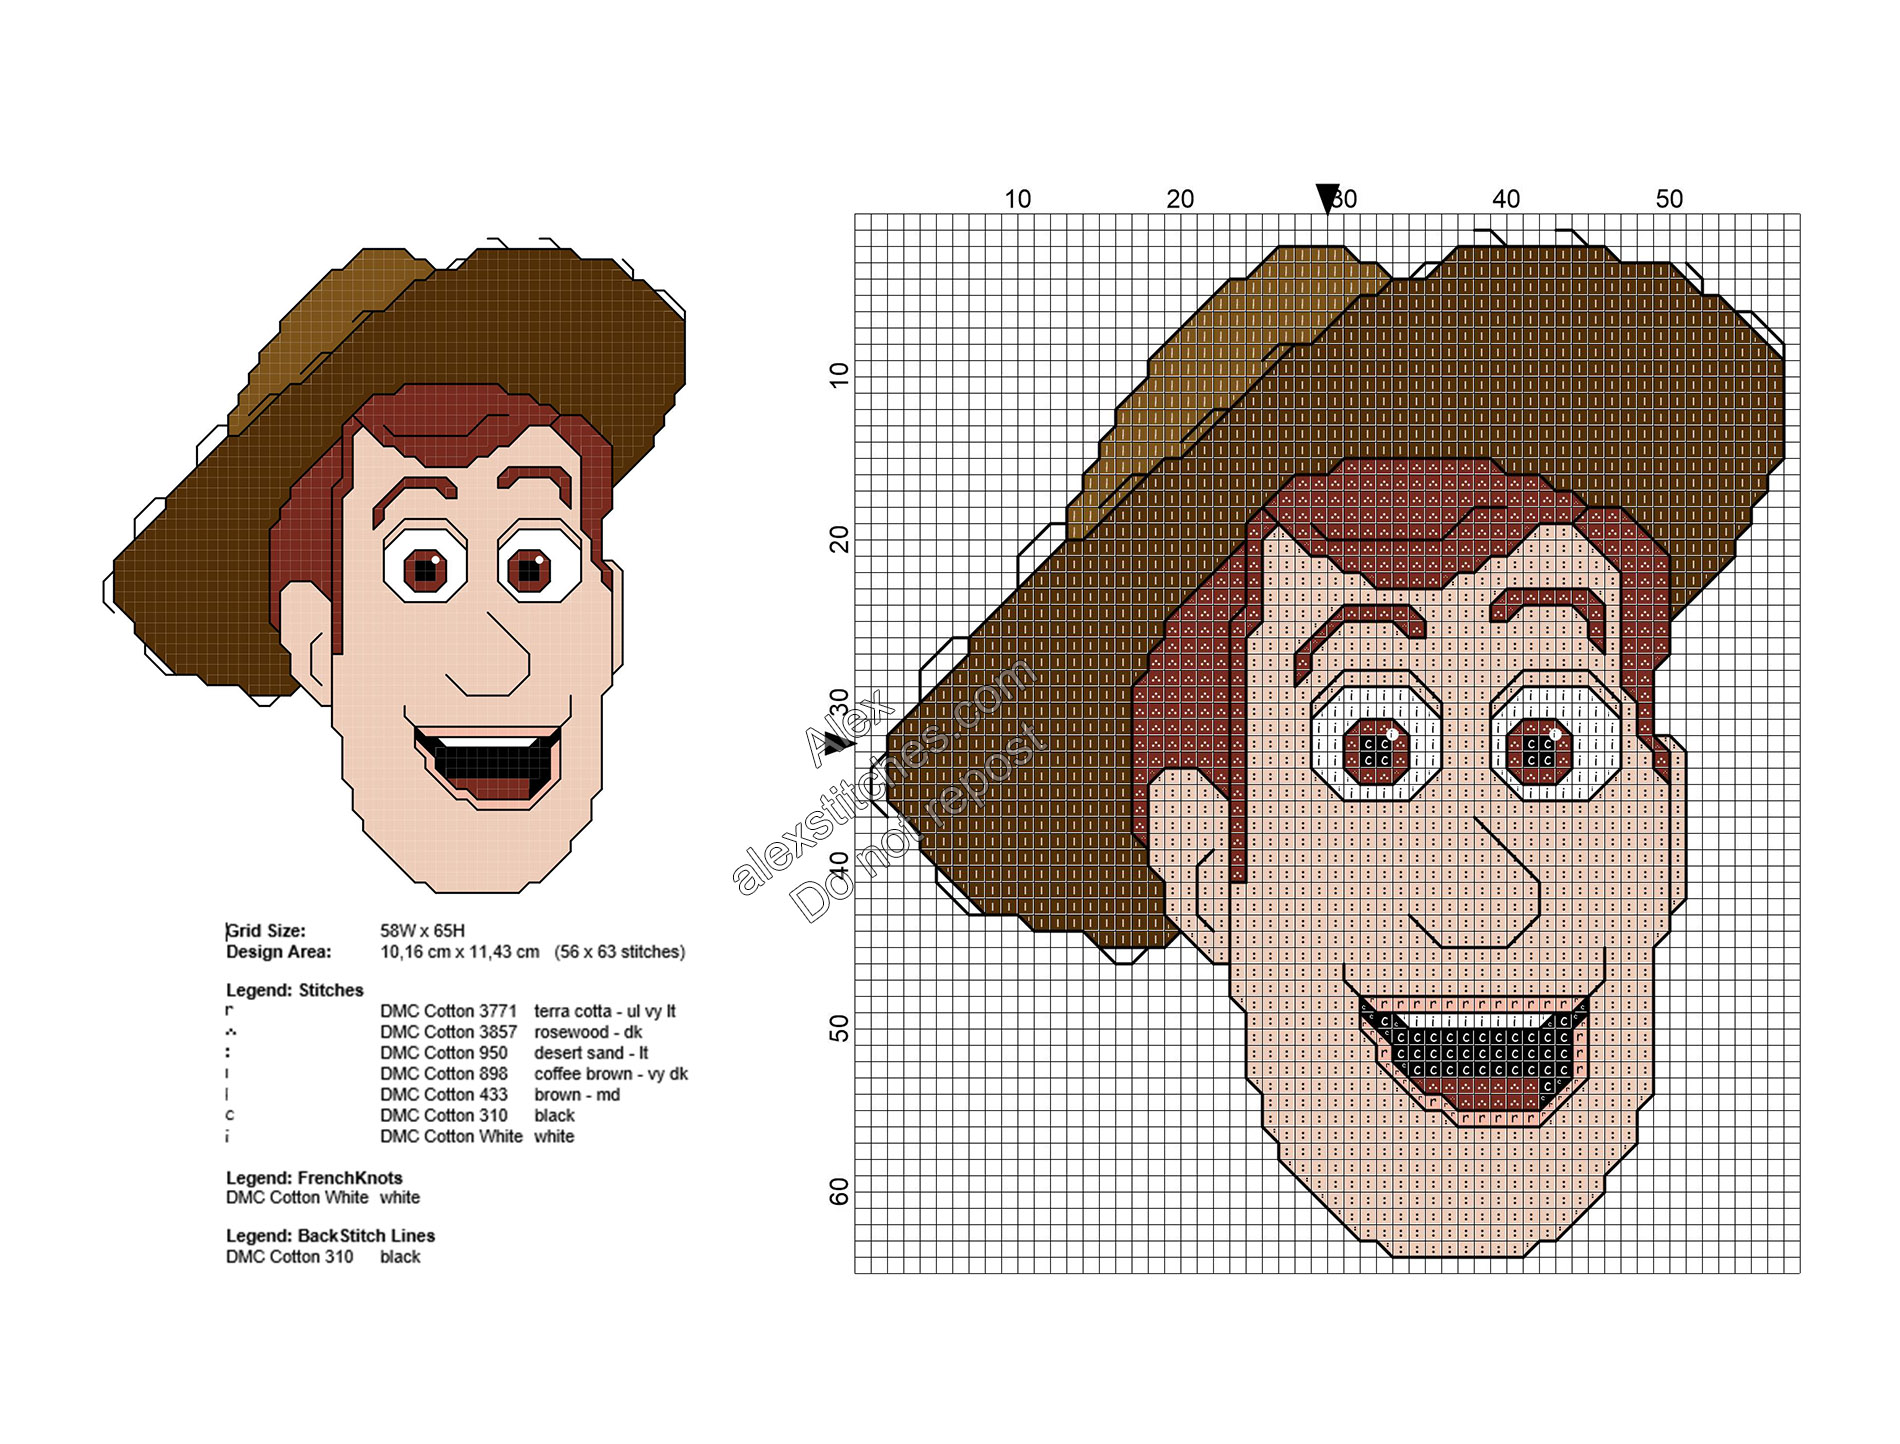 Woody Toy Story character free cross stitch pattern 56x63